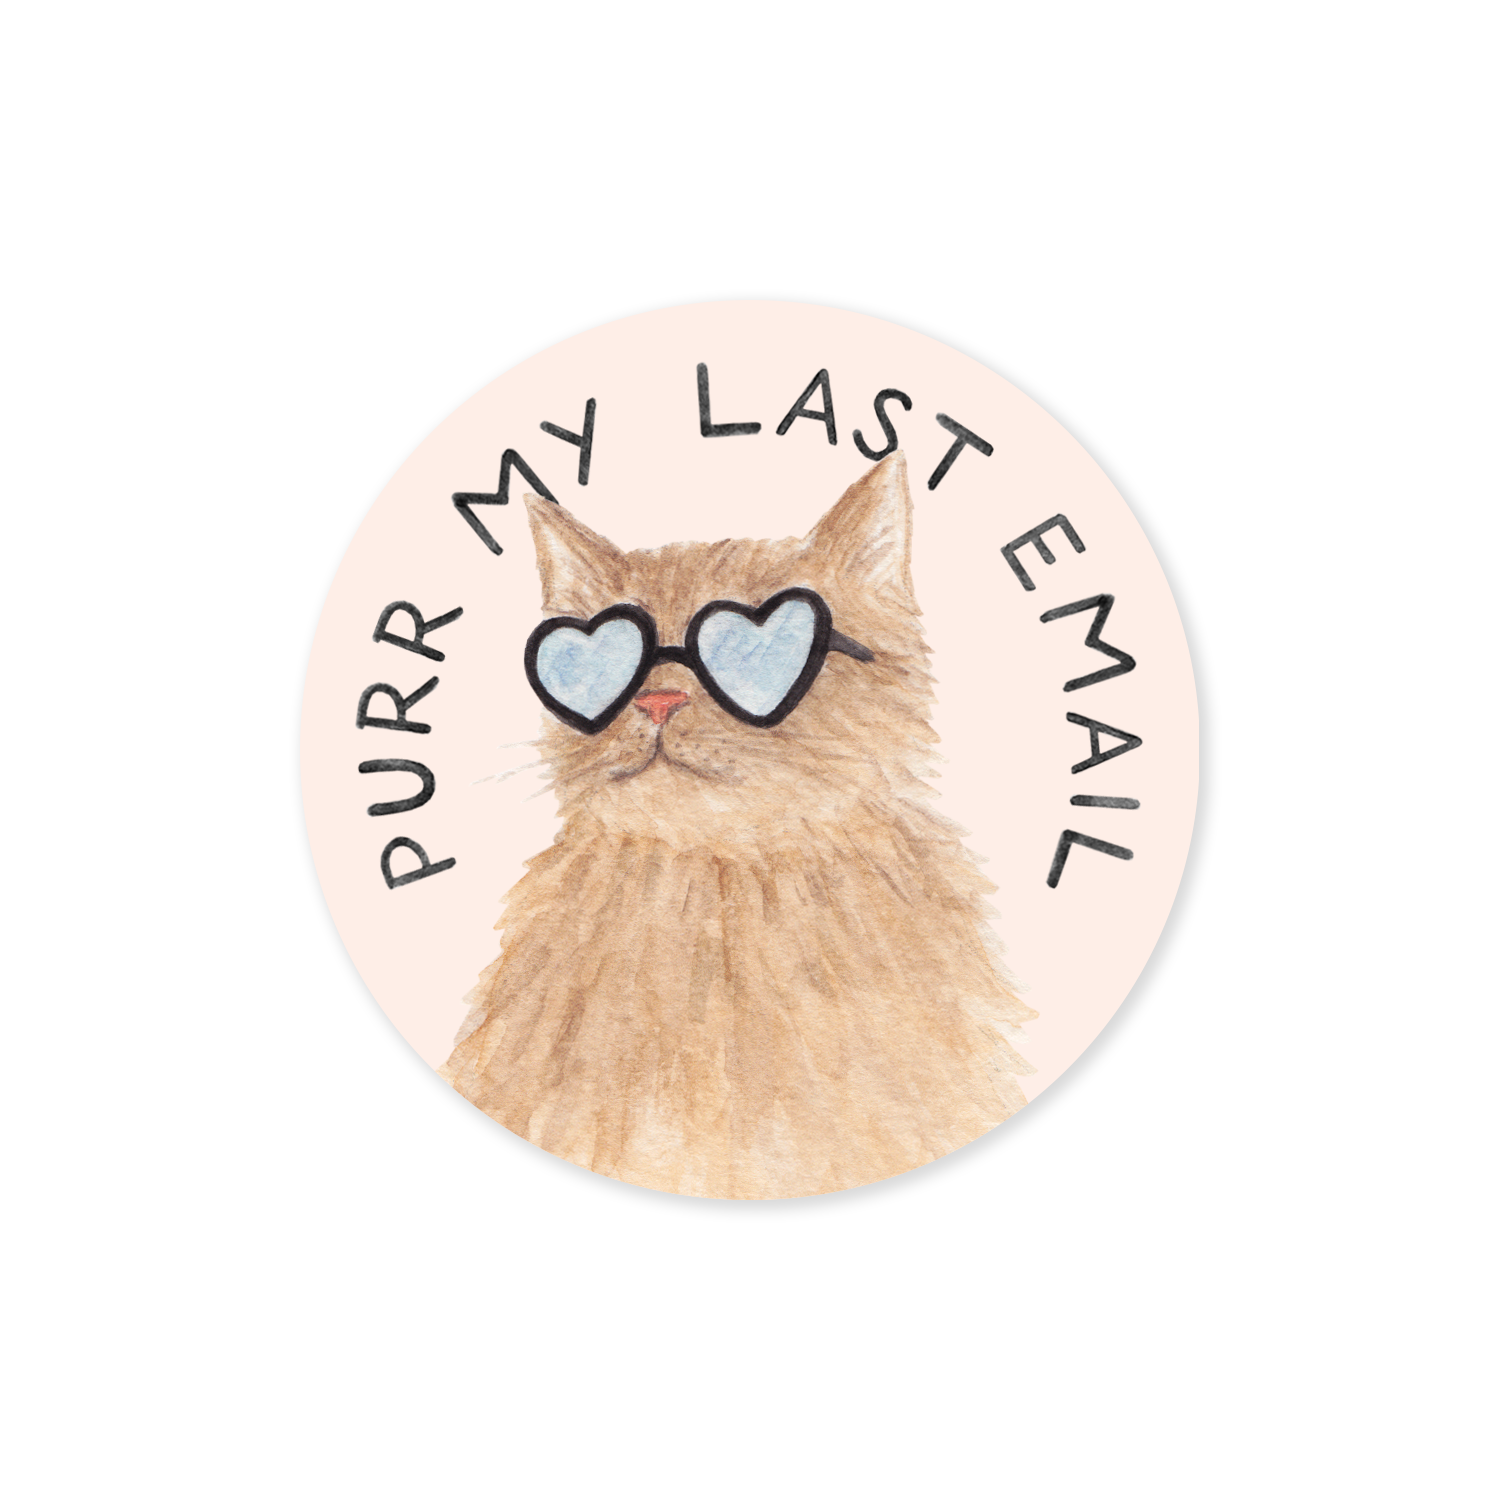 Per My Last Email — Sassy Cat Pun Vinyl Sticker